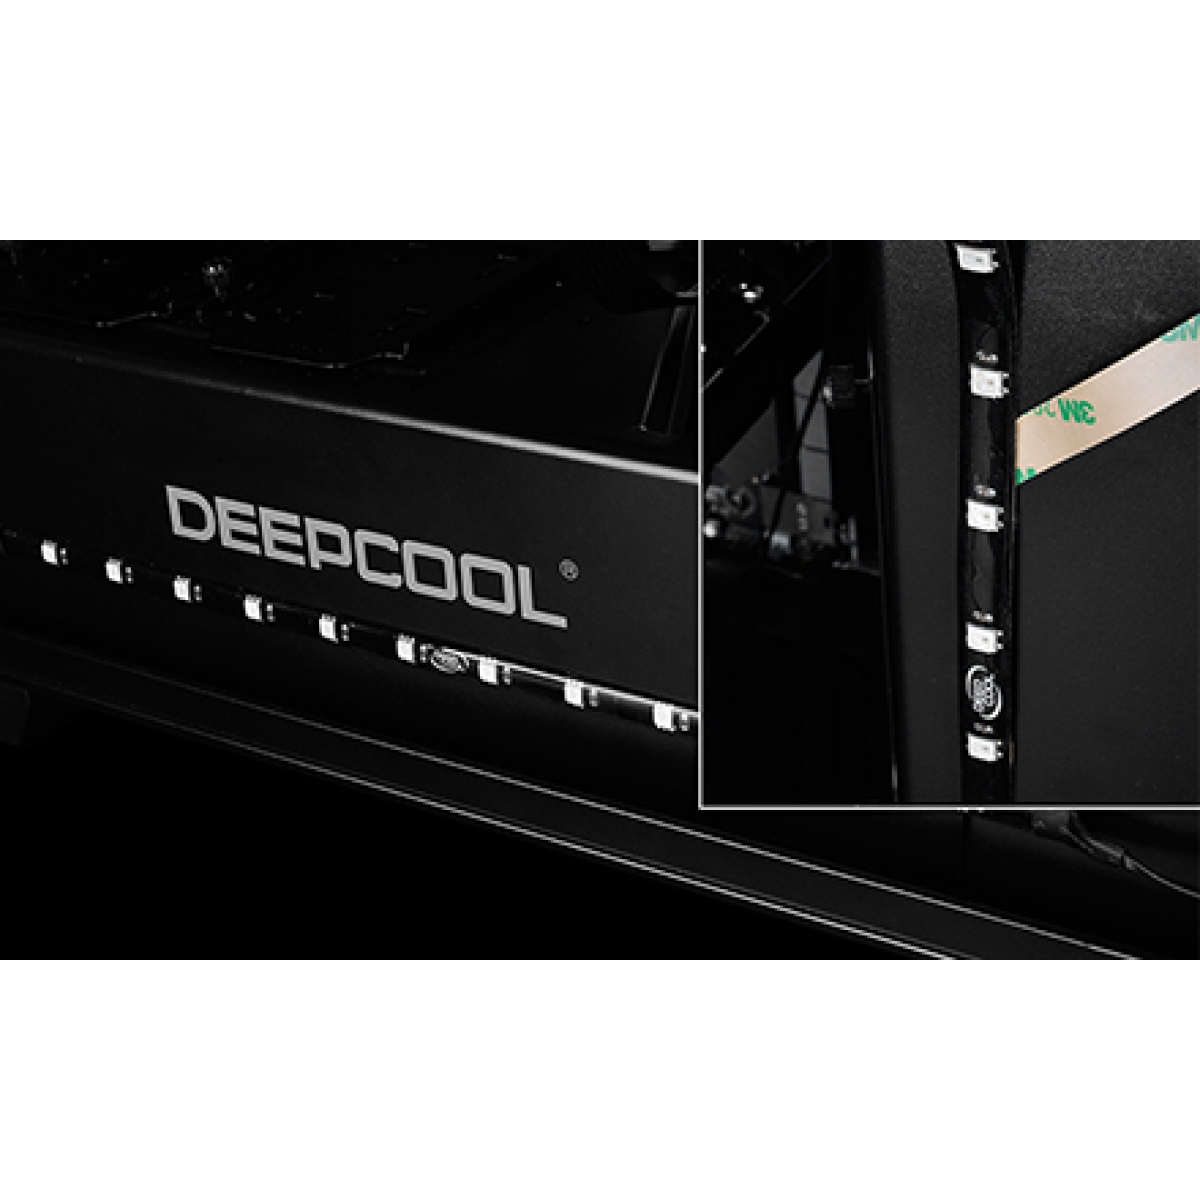 Fita de Led Deepcool RGB 200 Pro, DP-LED-RGB200PRO